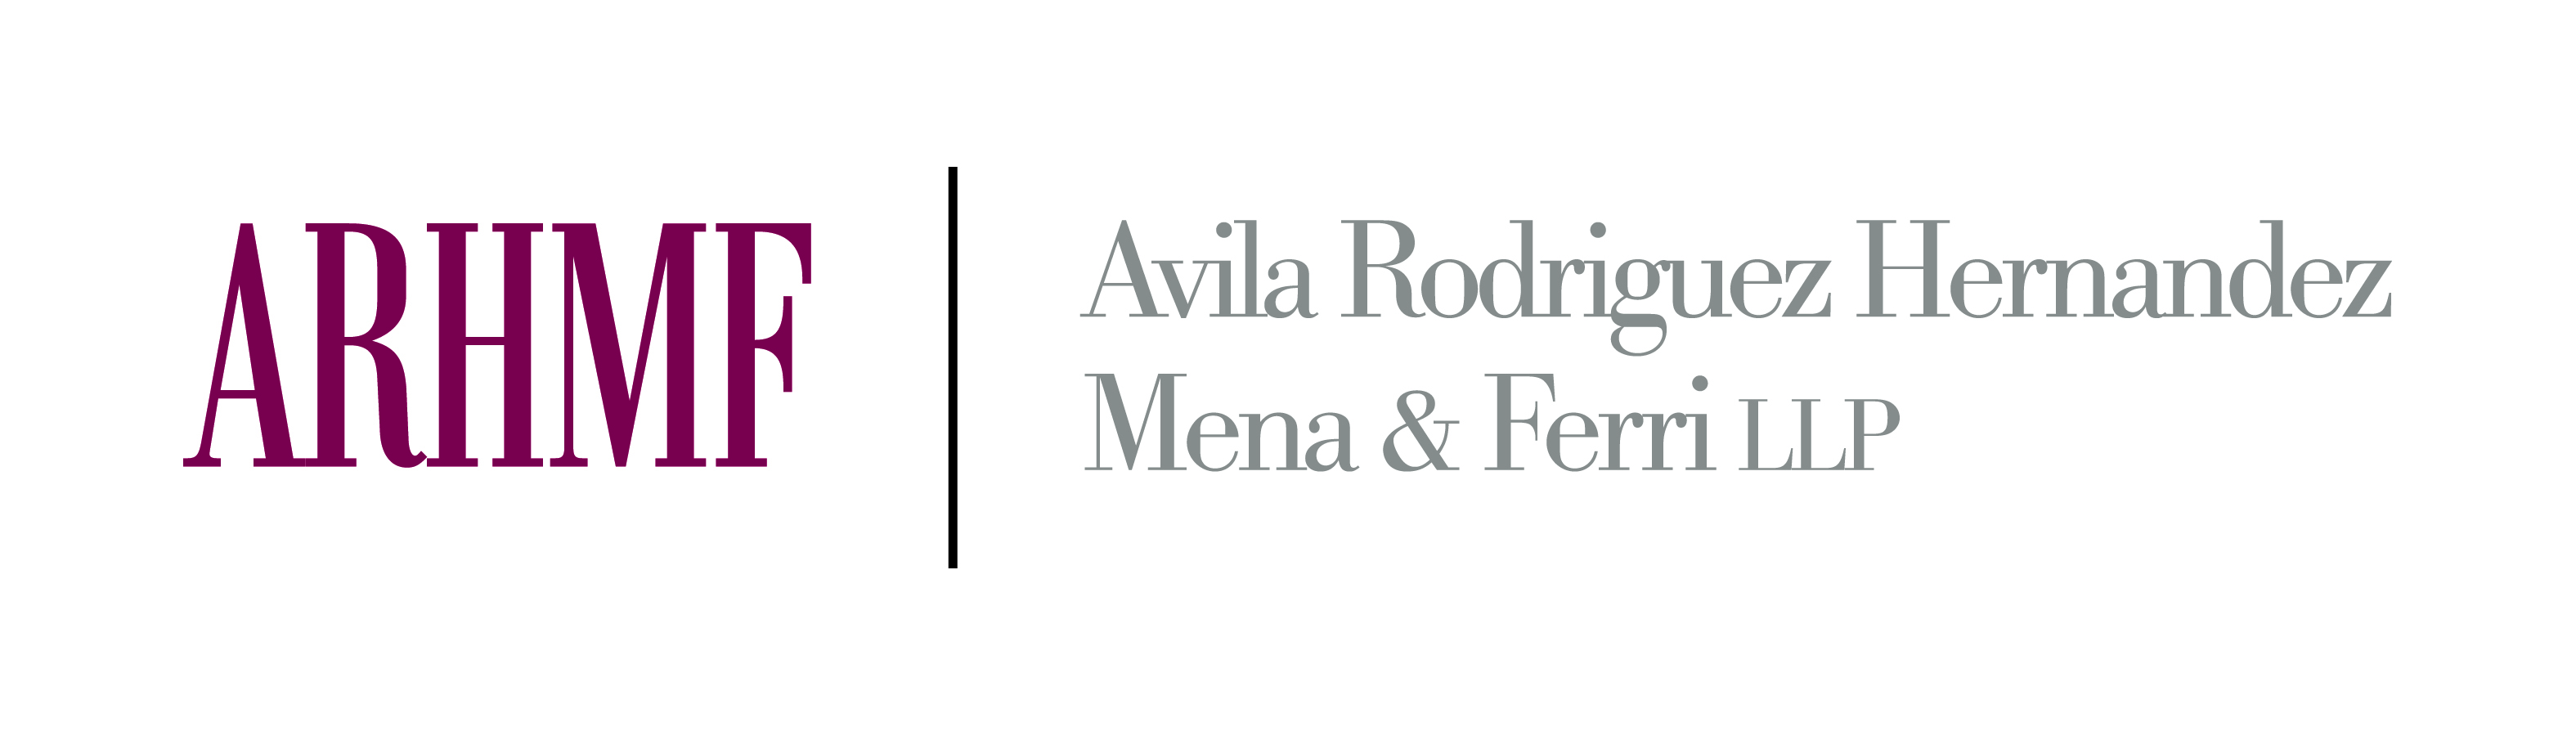 Avila Rodriguez Hernandez Mena & Ferri LLP